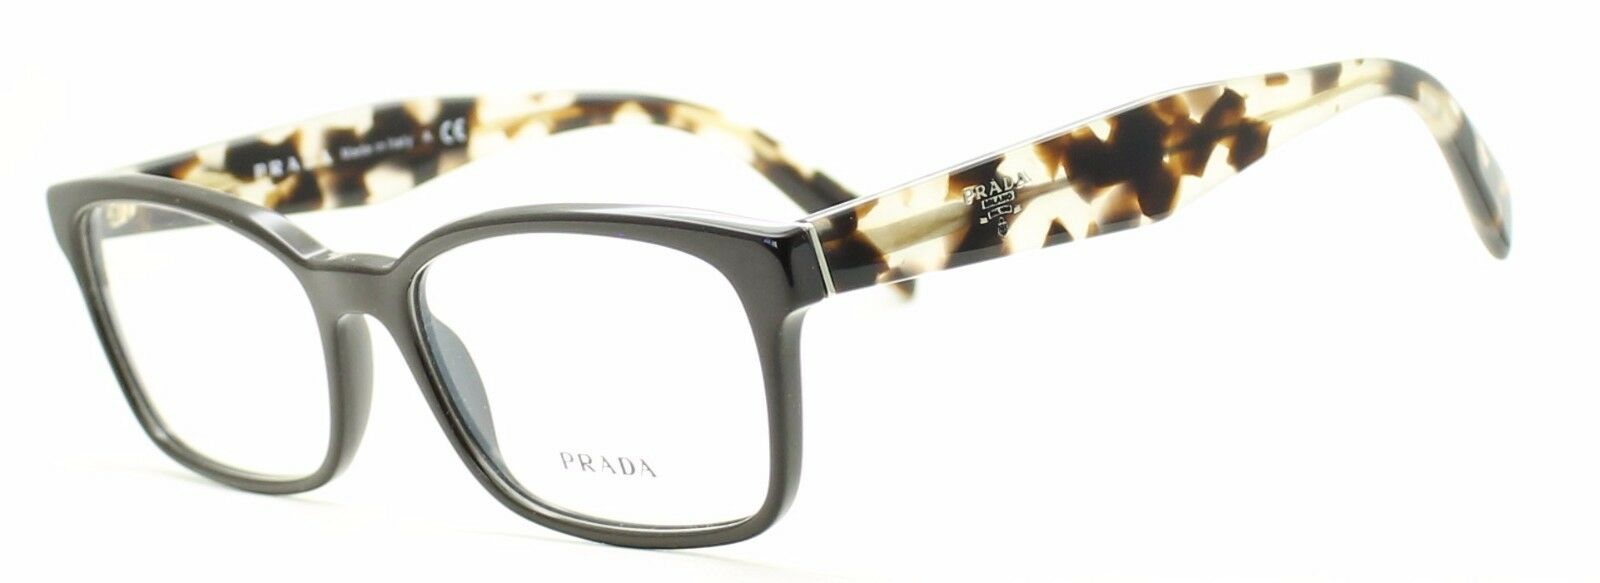 PRADA VPR 18T DH0-1O1 53mm Eyewear FRAMES Eyeglasses RX Optical Glasses - Italy